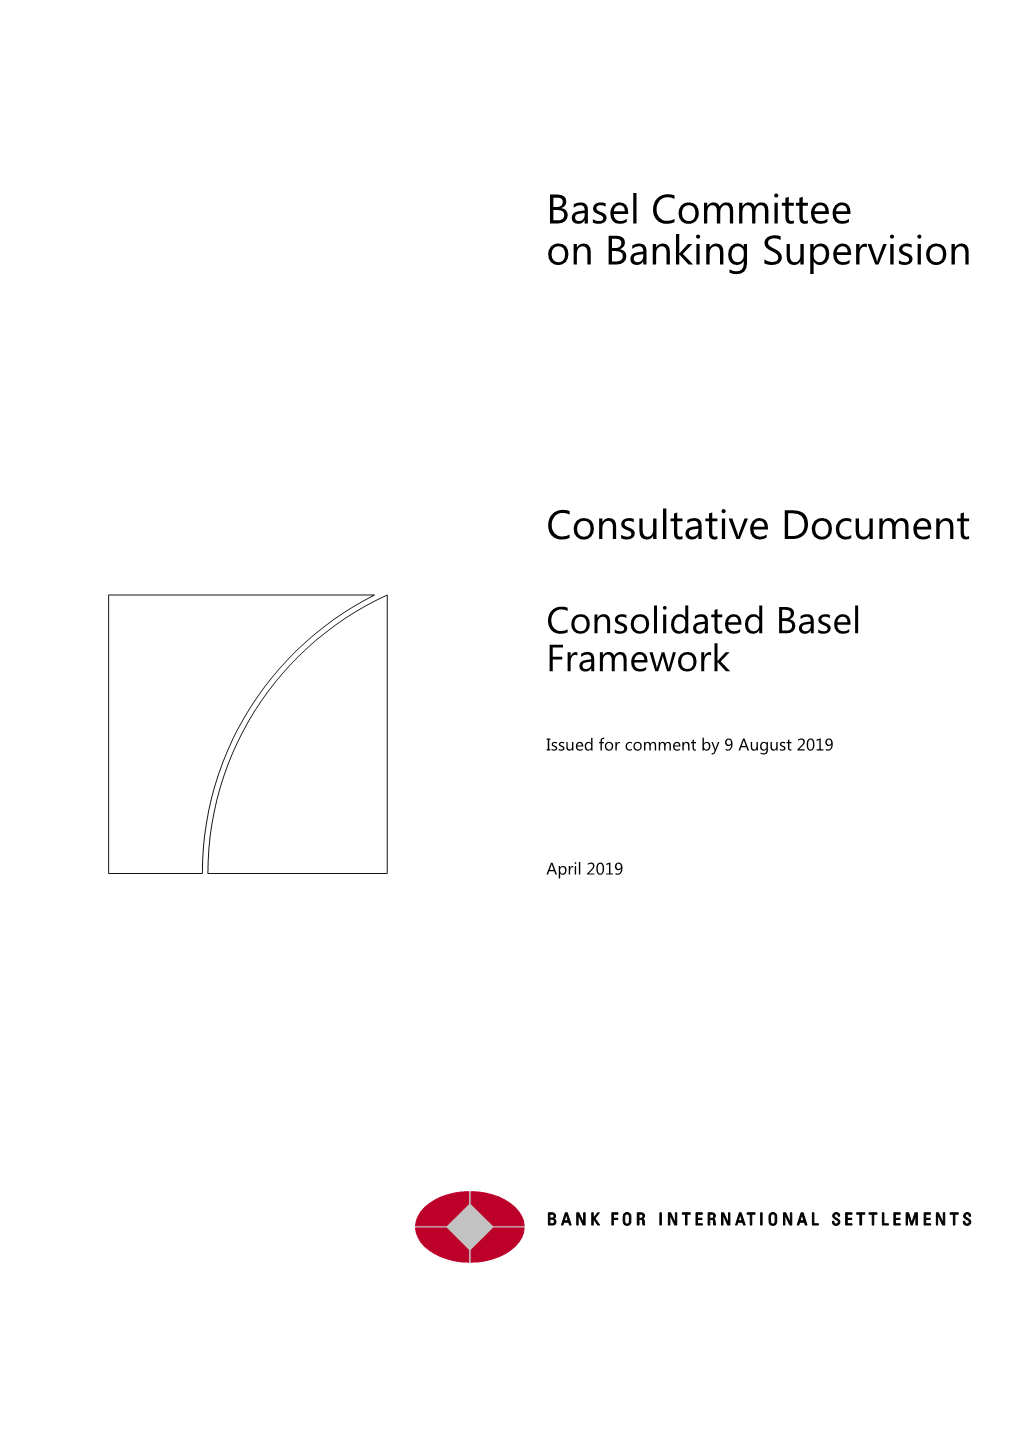 Consolidated Basel Framework